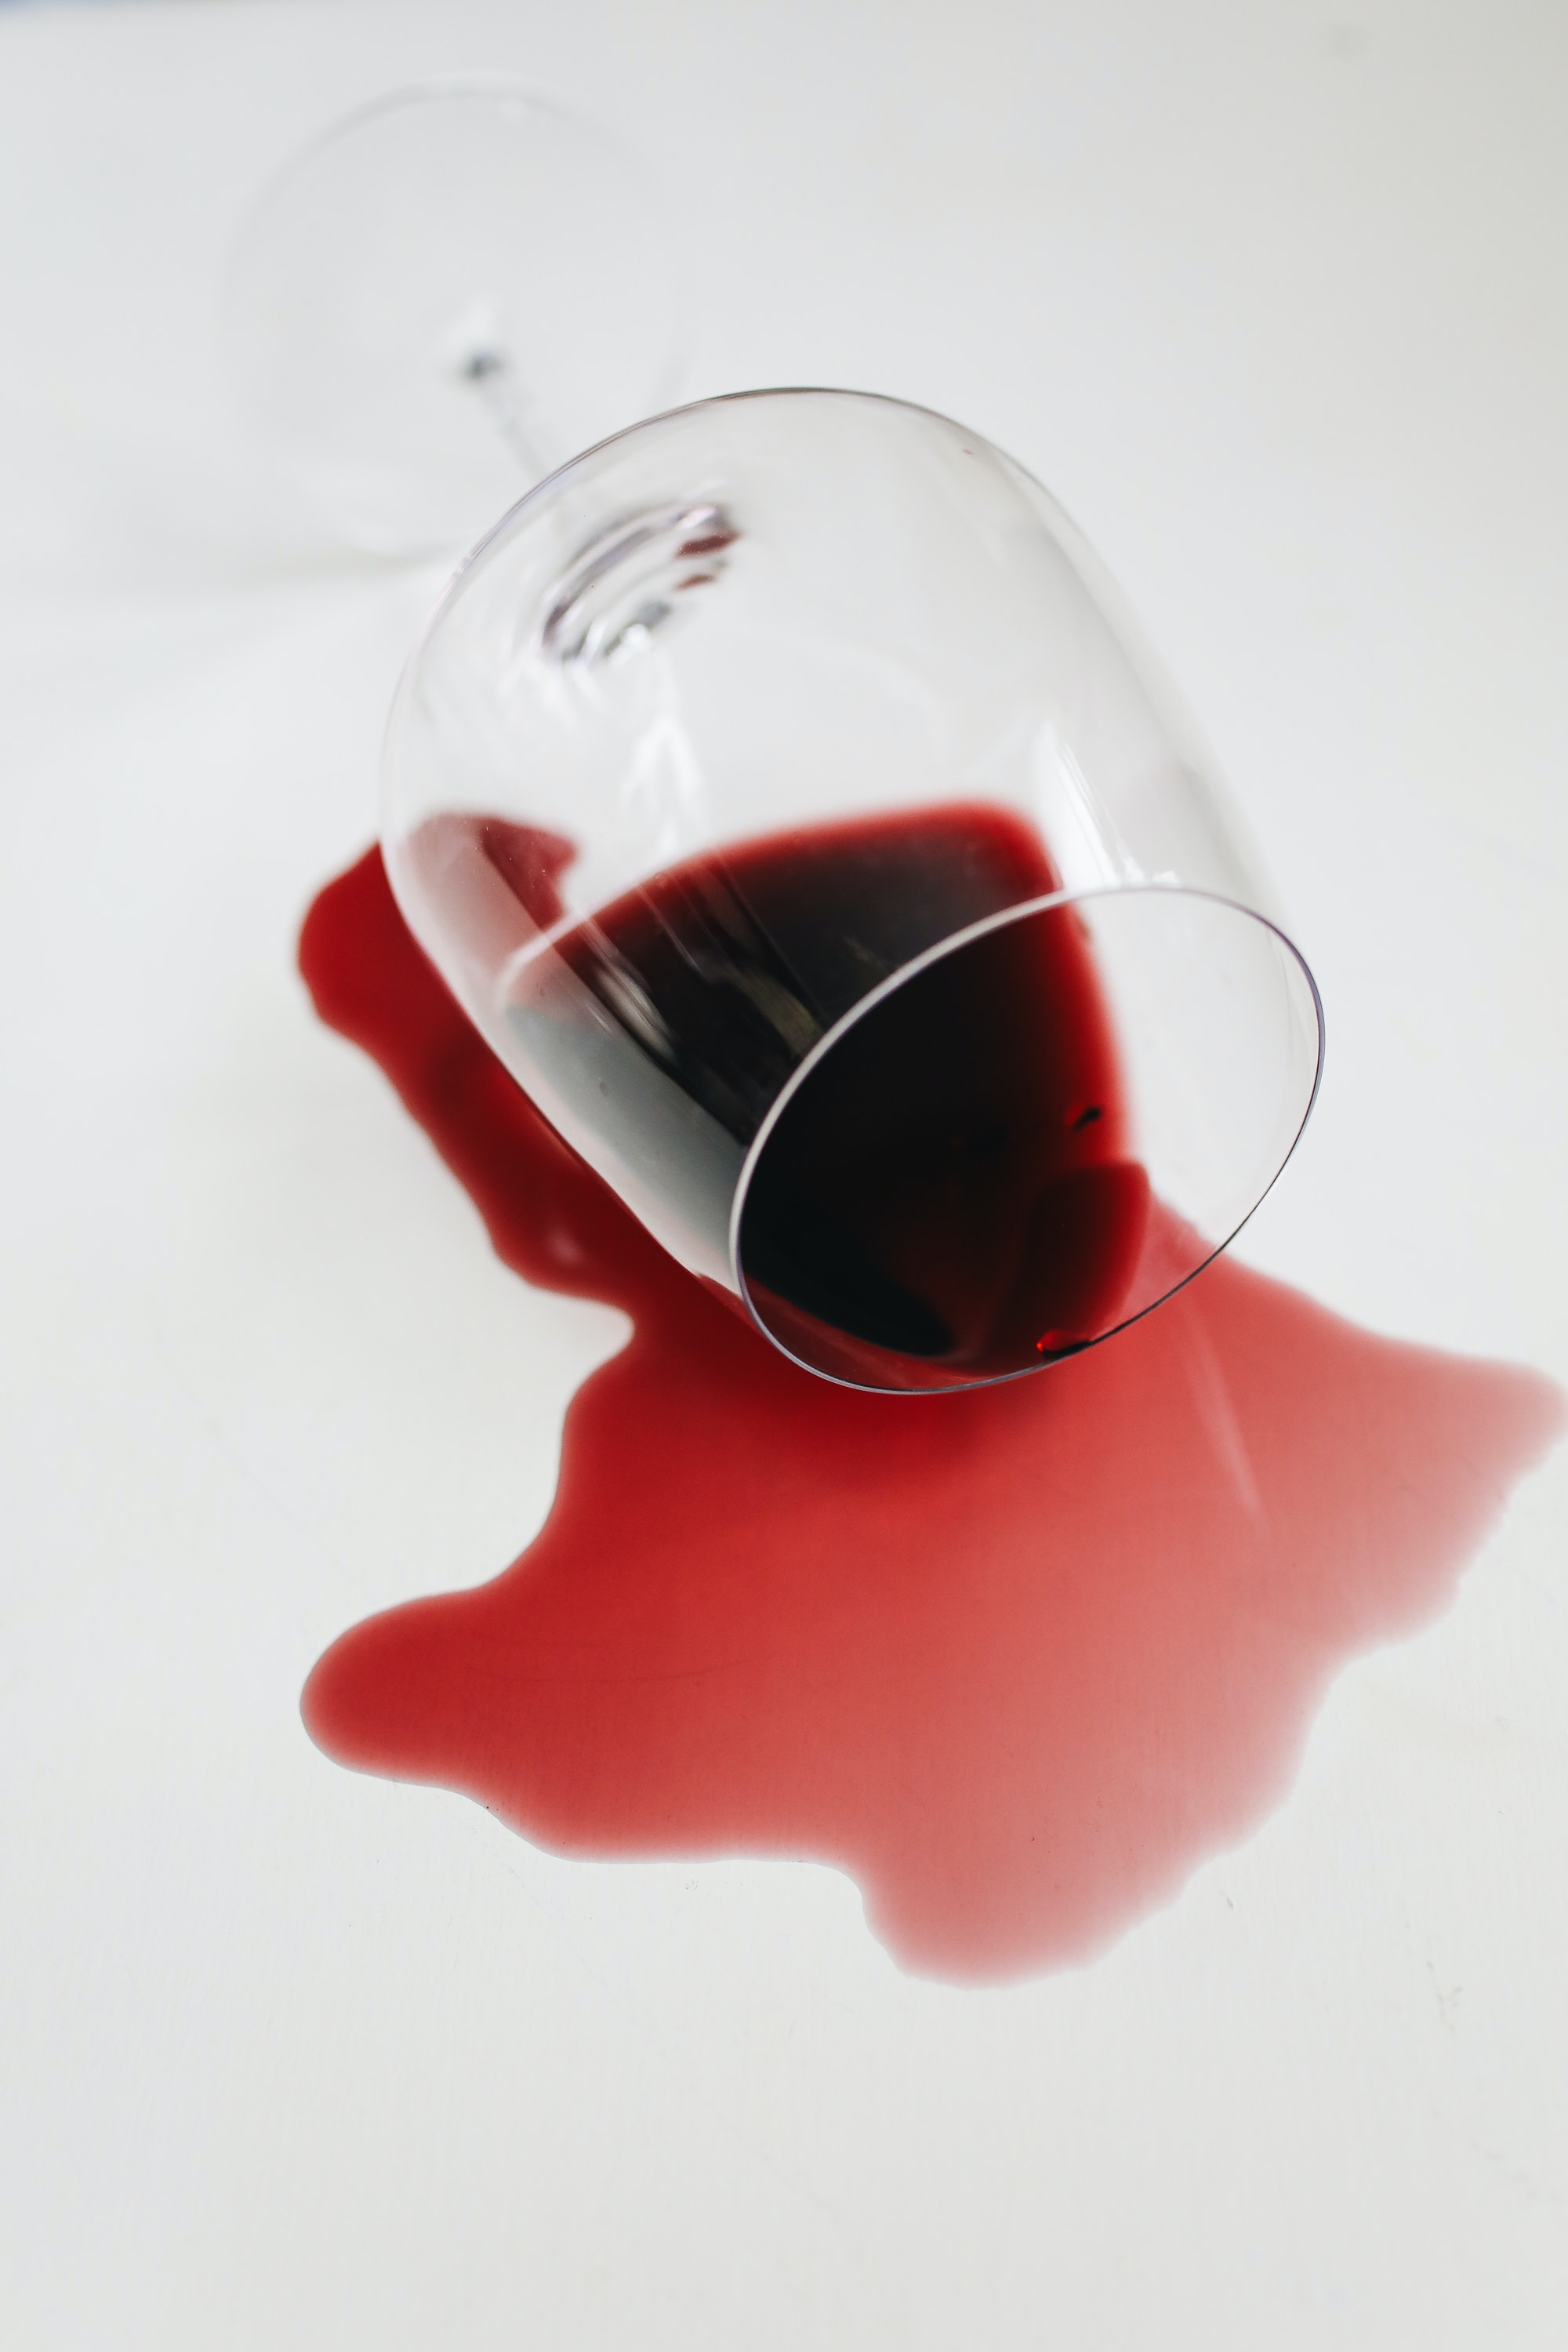 Wine Spill on Glass Countertops or Glass Flooring Jockimo Glass Company